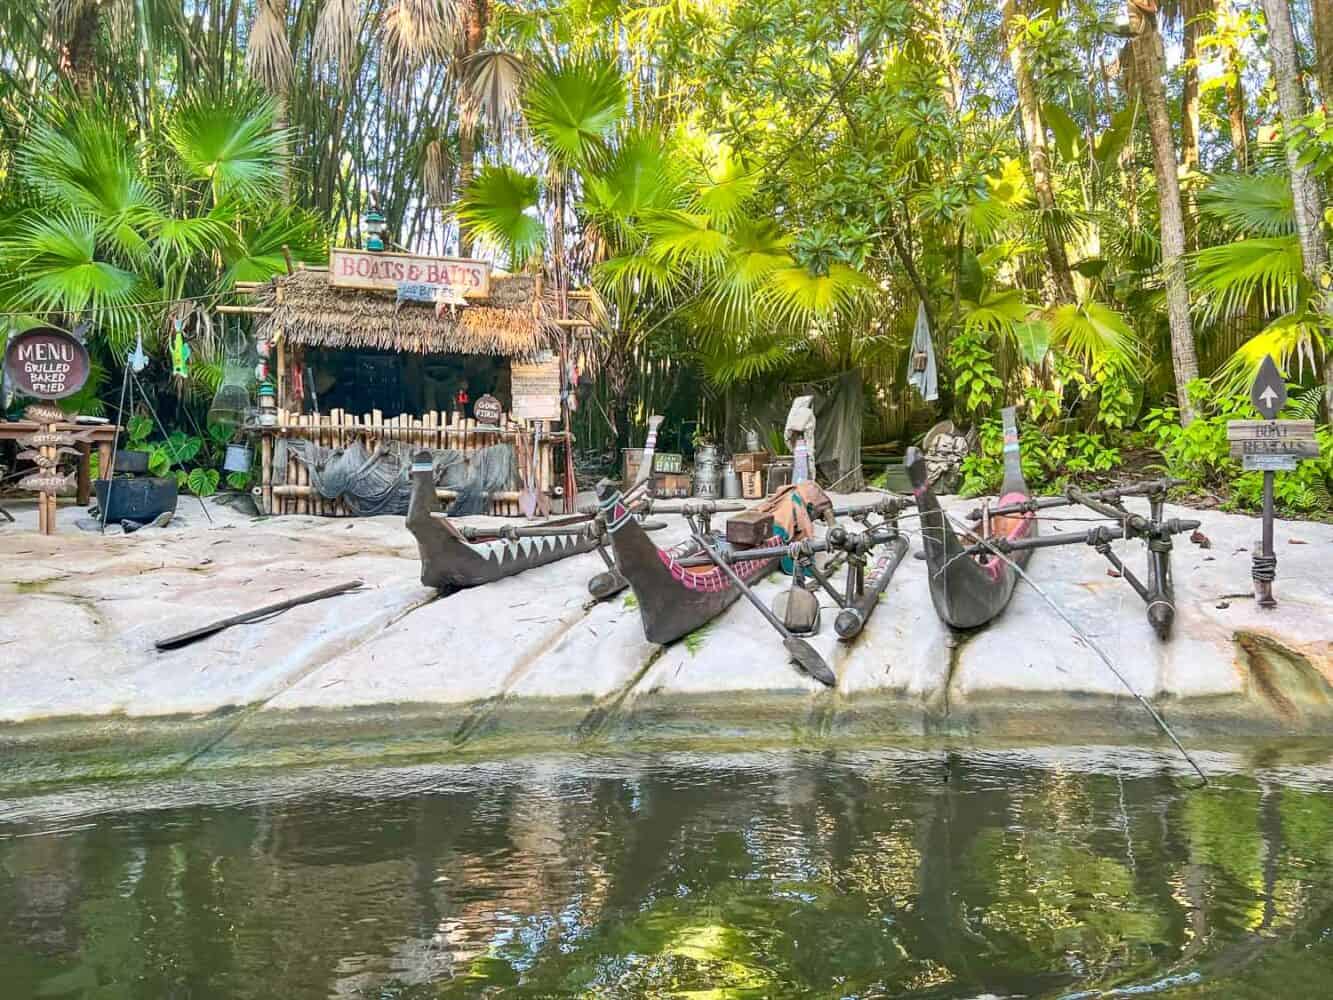 Boat shack scene along the Jungle Cruise ride, Magic Kingdom, Disney World